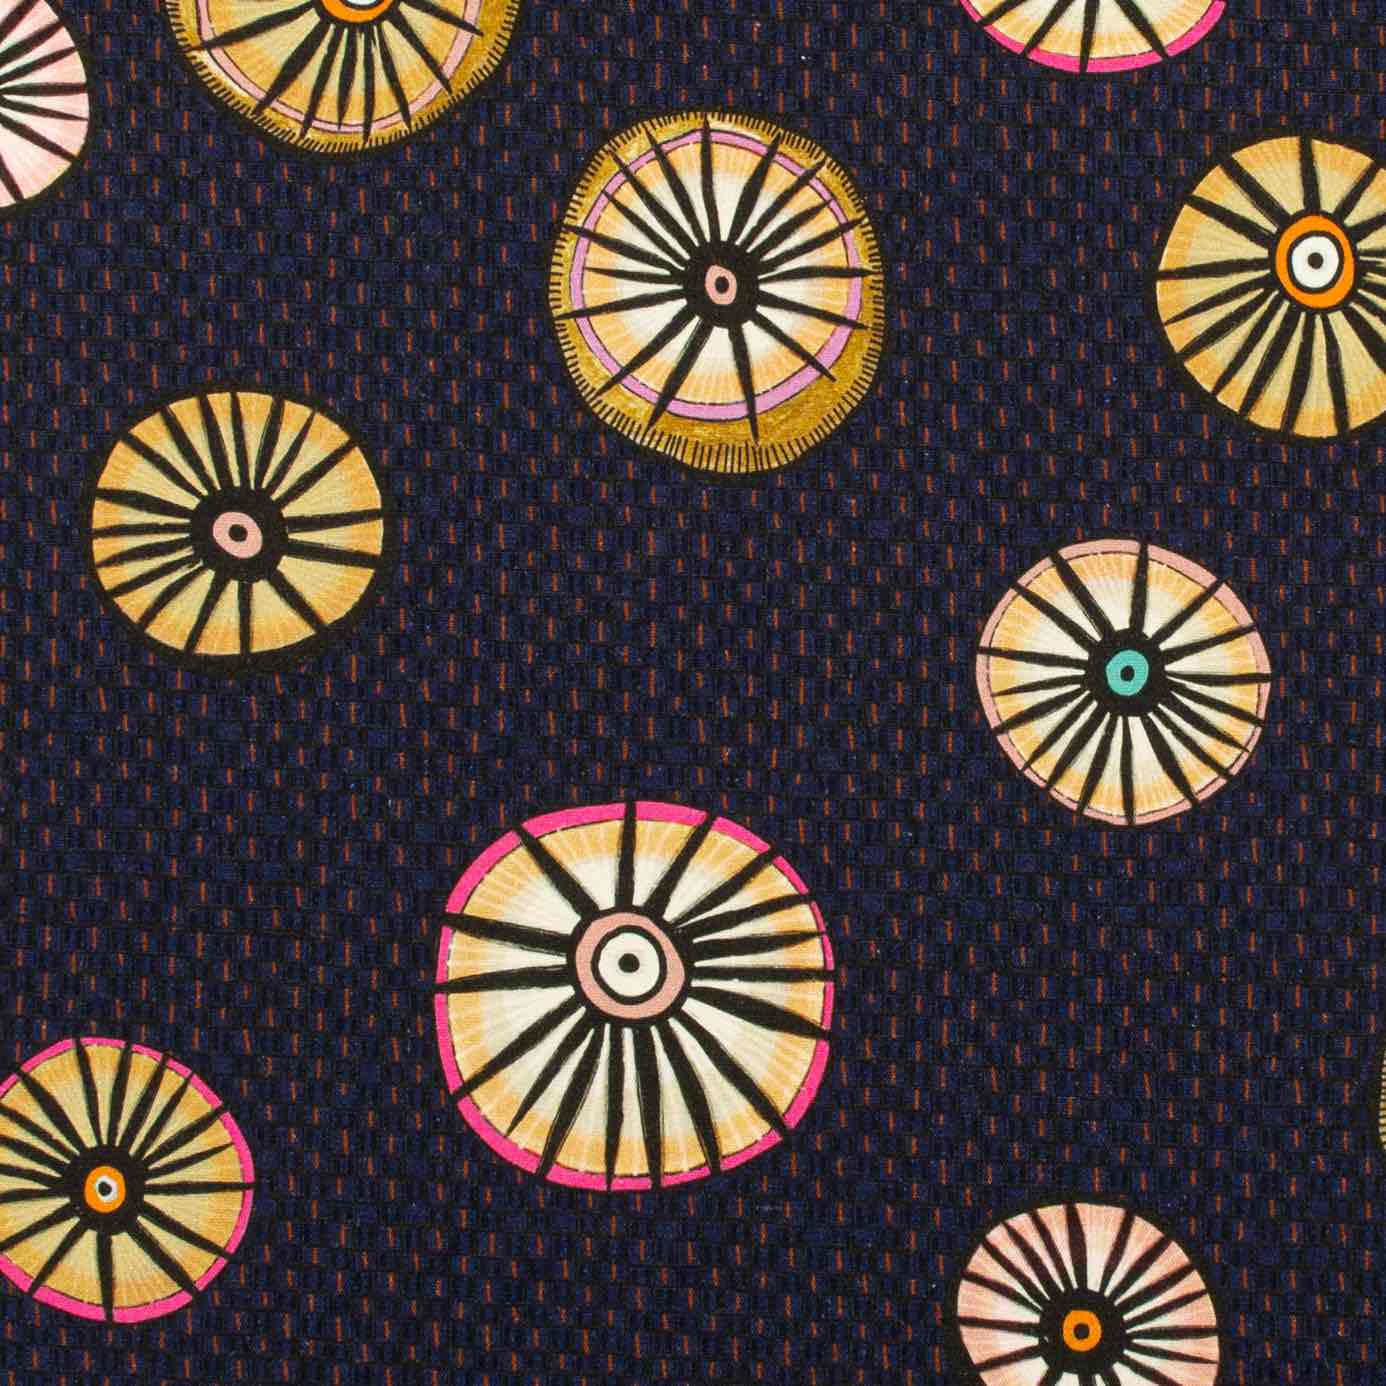 Amasumpa Moonlight Fabric